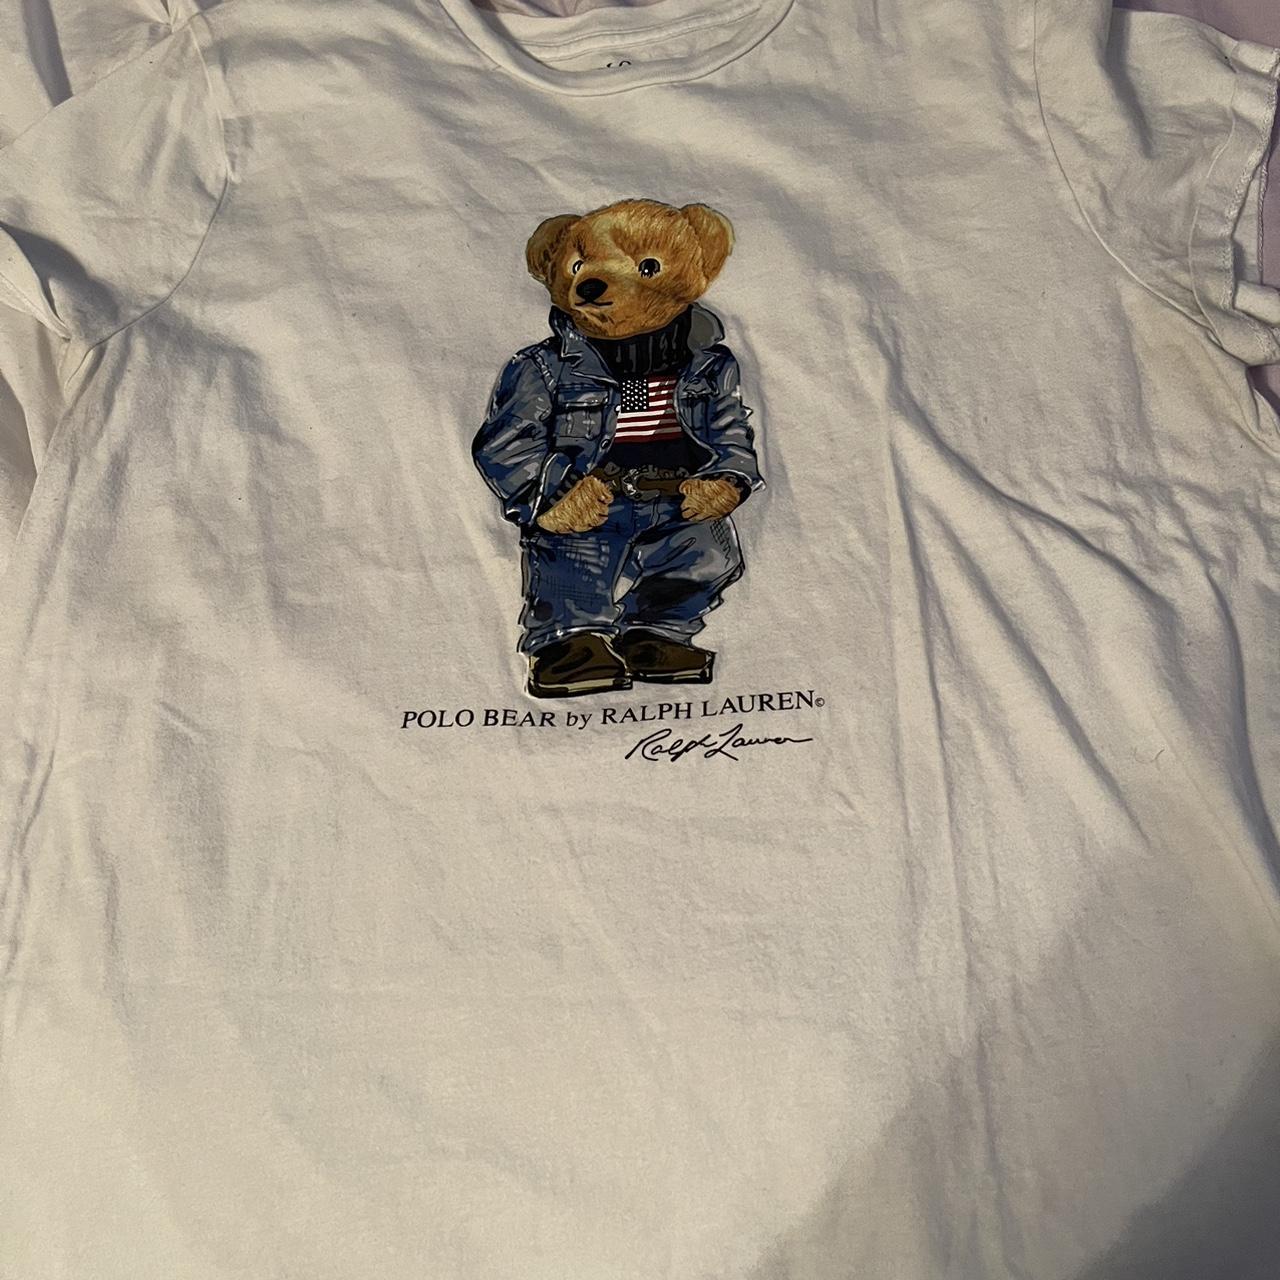 Polo Bear - LARGE IN KIDS re upload, shirt still... - Depop